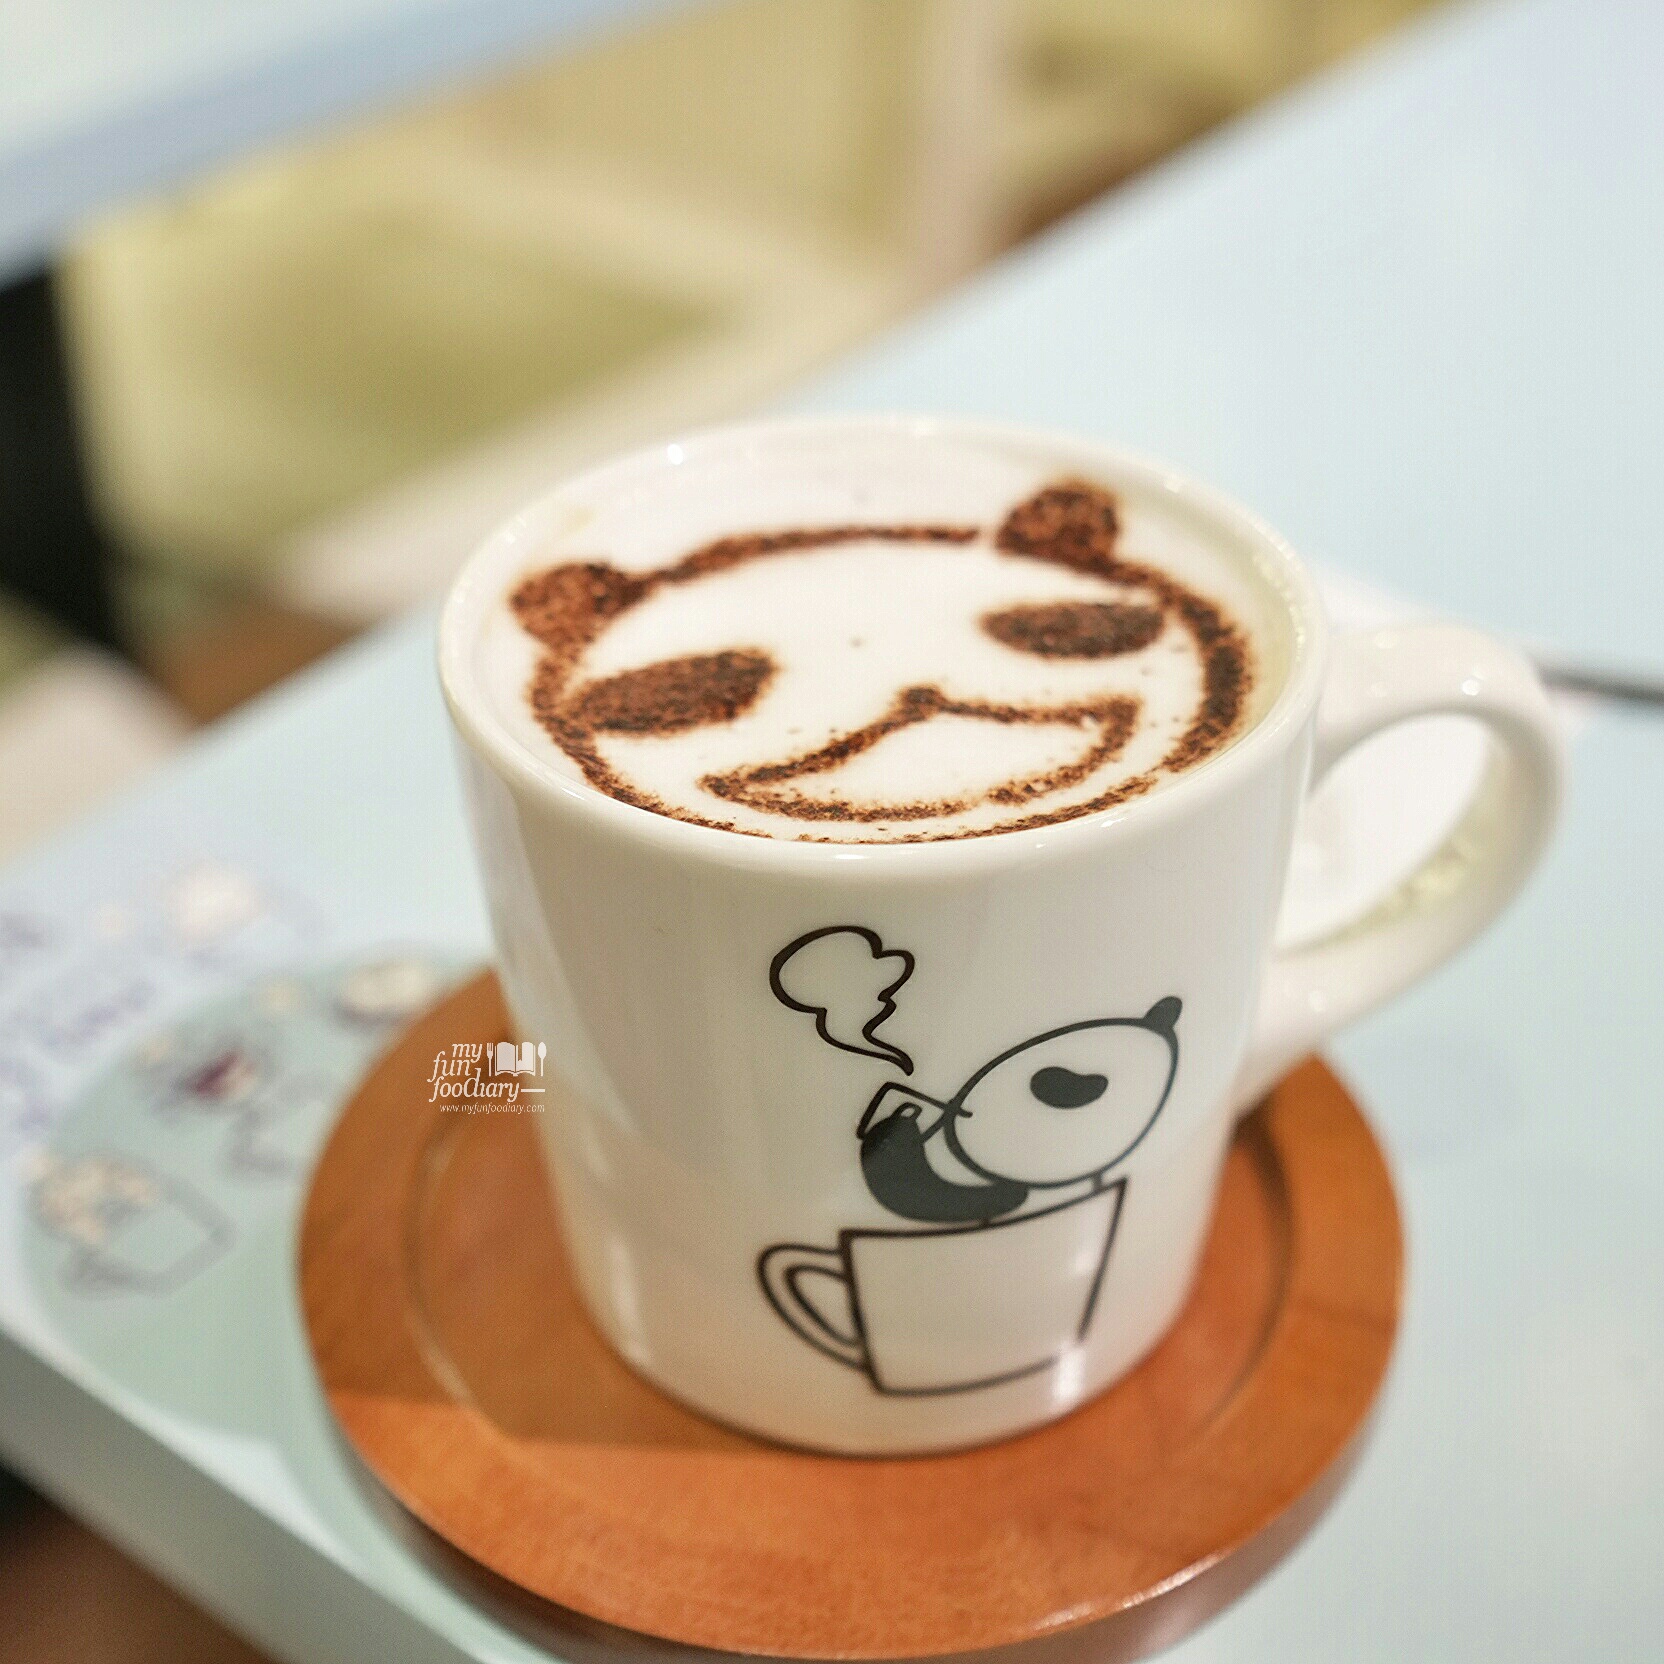 Cafe Latte at Aranzi Cafe Jakarta by Myfunfoodiary